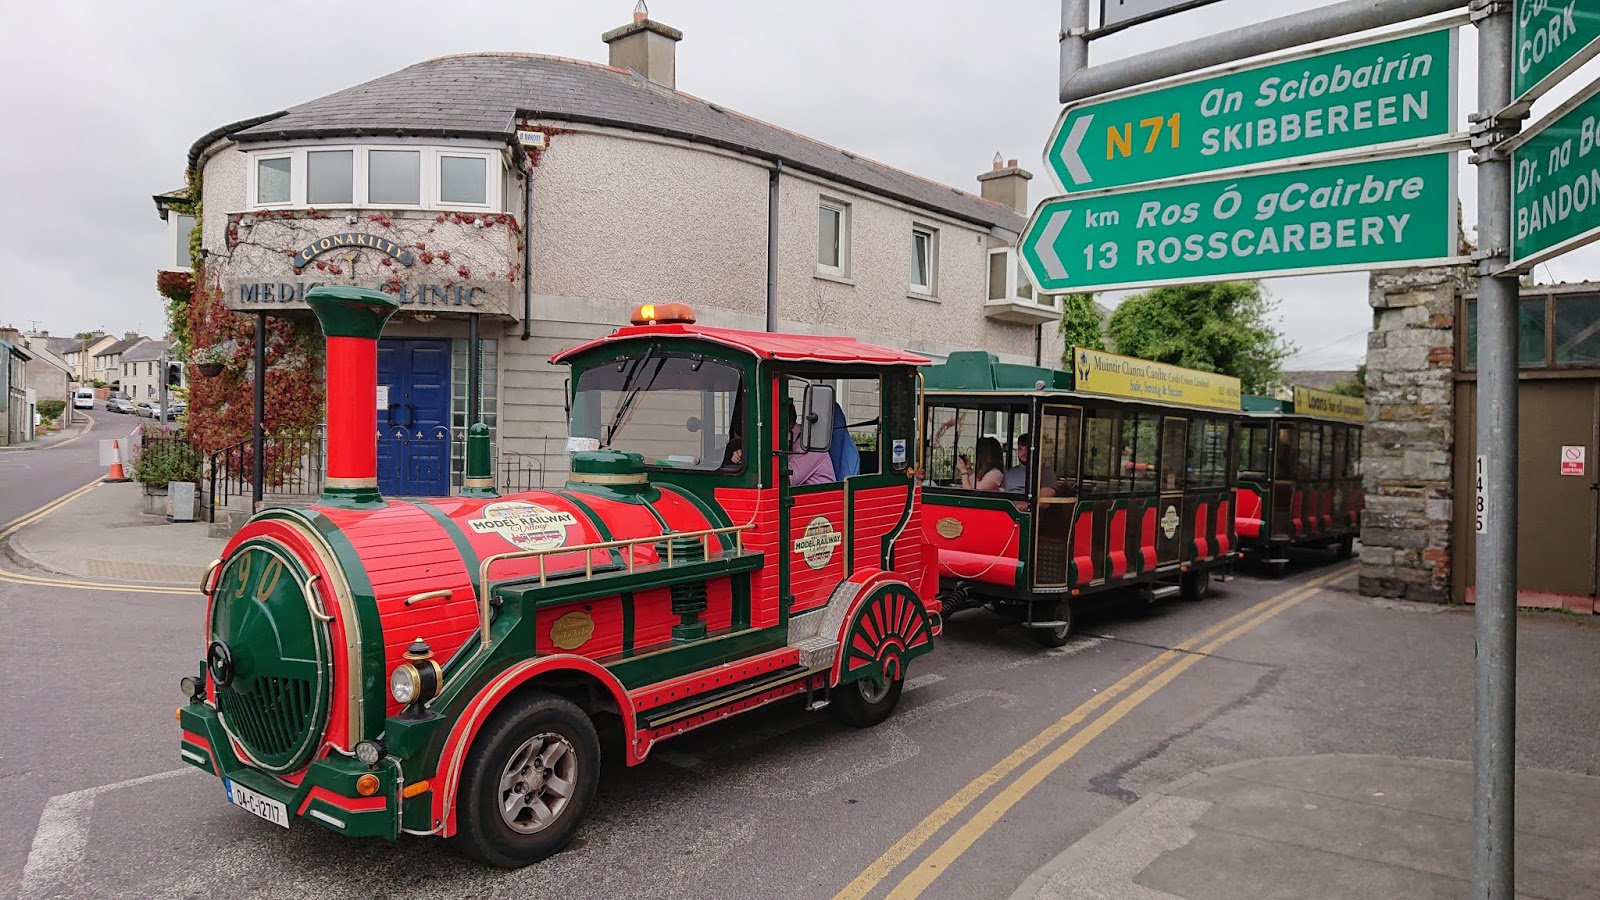 Bus ireann Timetable Route 237, Cork - Clonakilty 